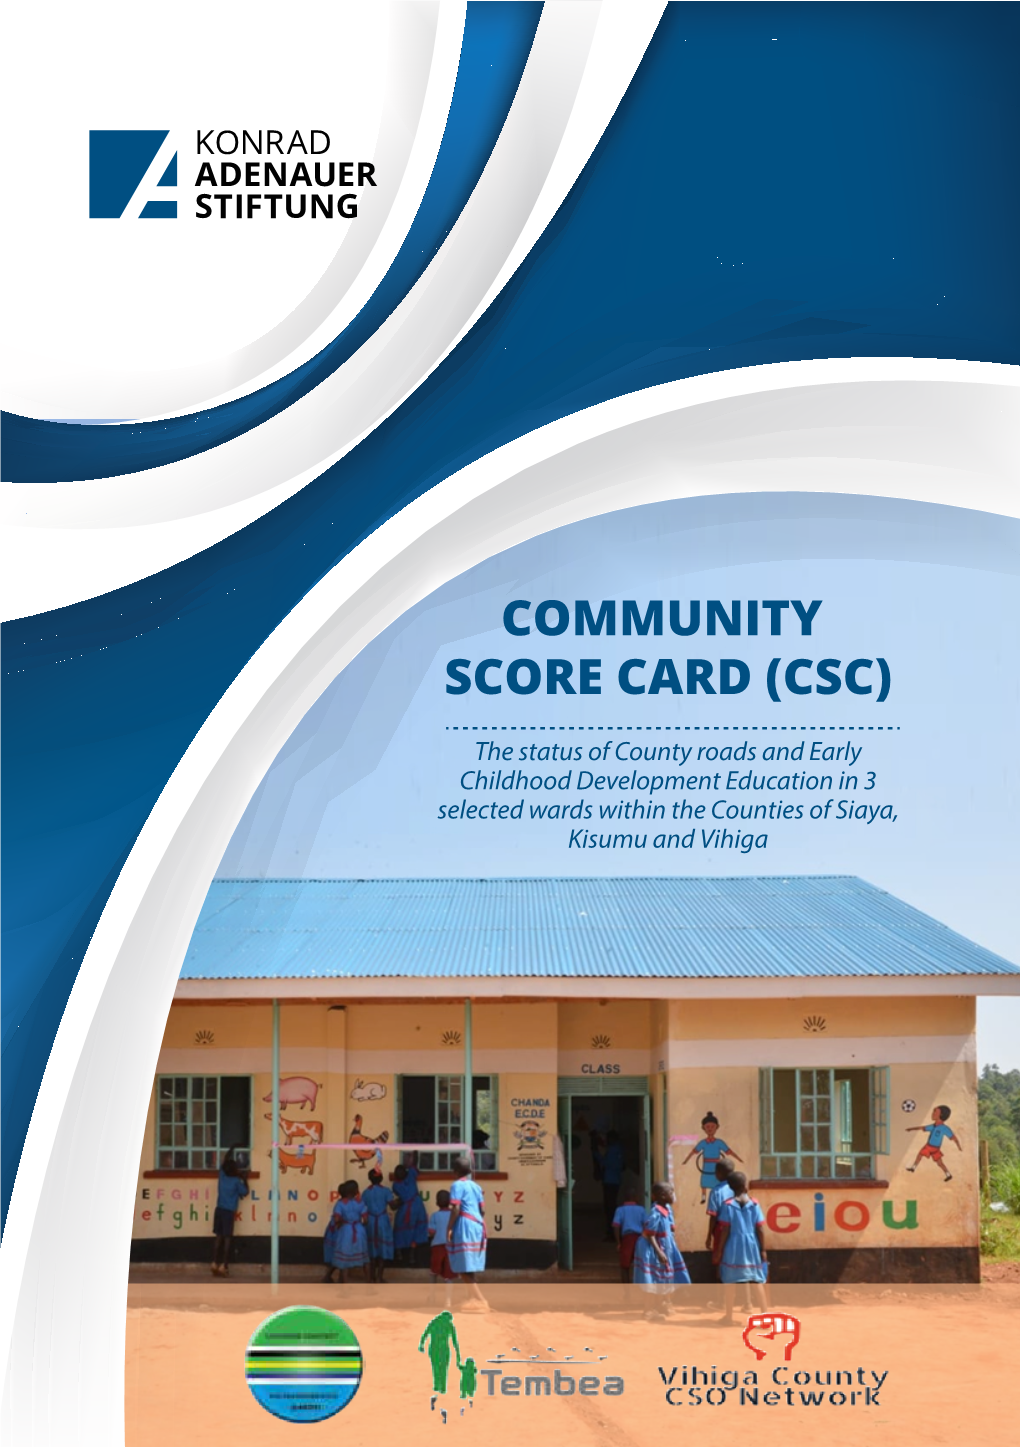 Community Score Card (Csc)